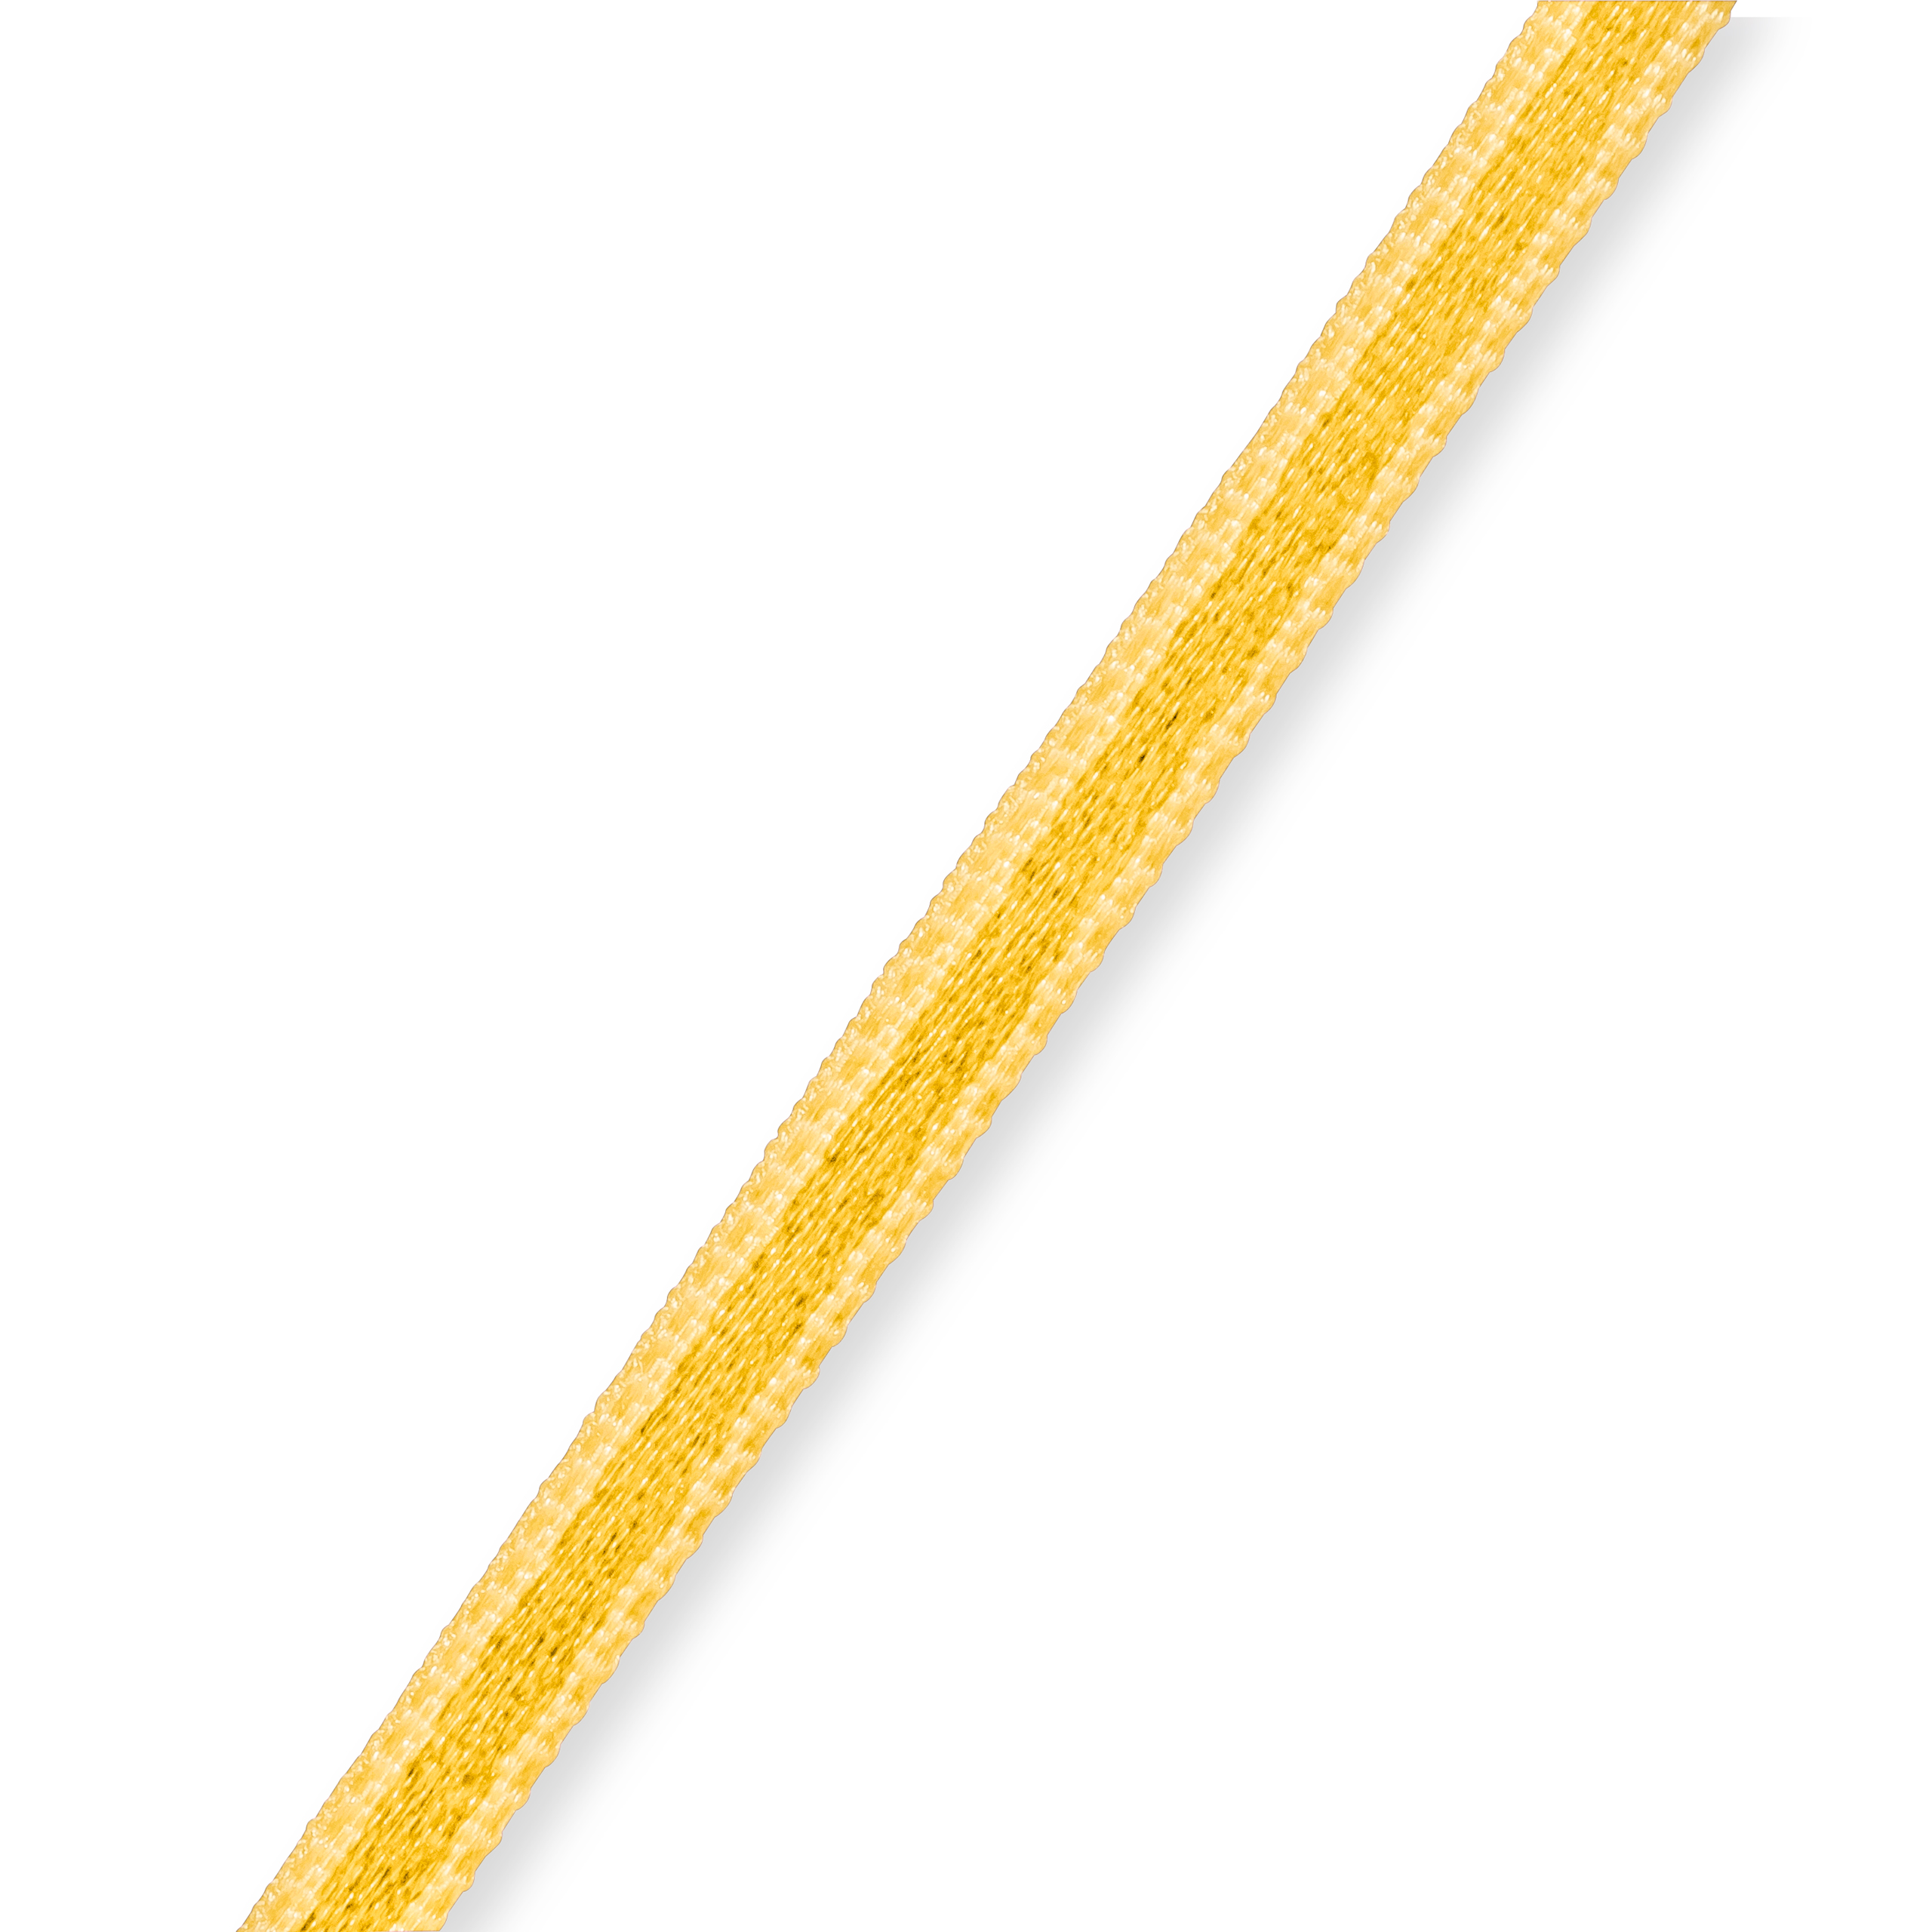 Satin ribbon 3 mm neon yellow, 50 m